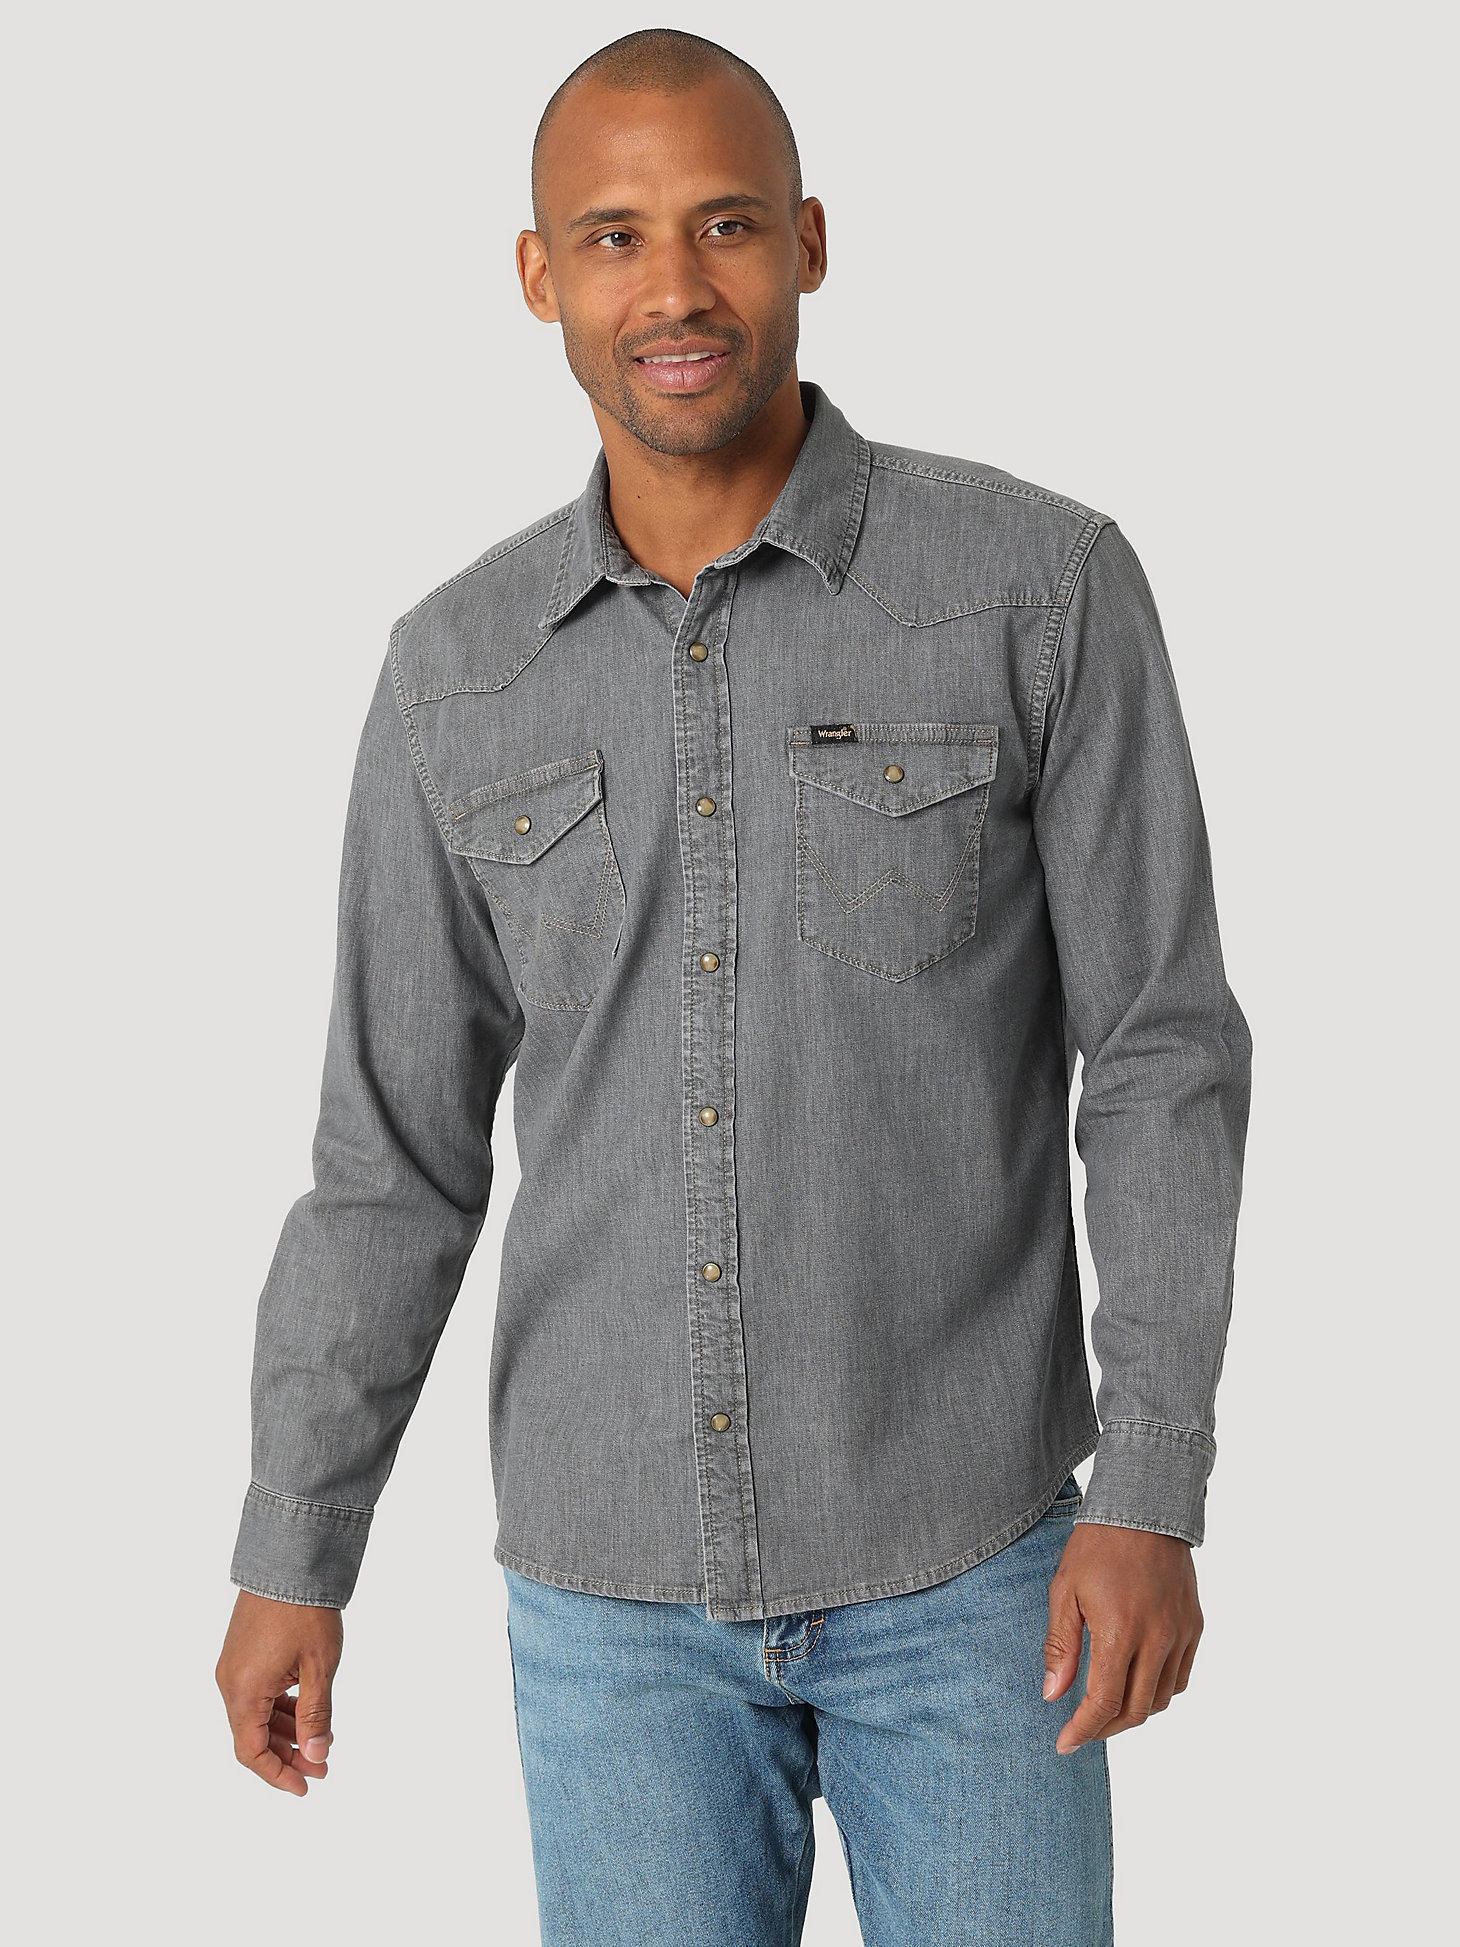 Men's Denim Western Snap Front Shirt in Grey Denim main view